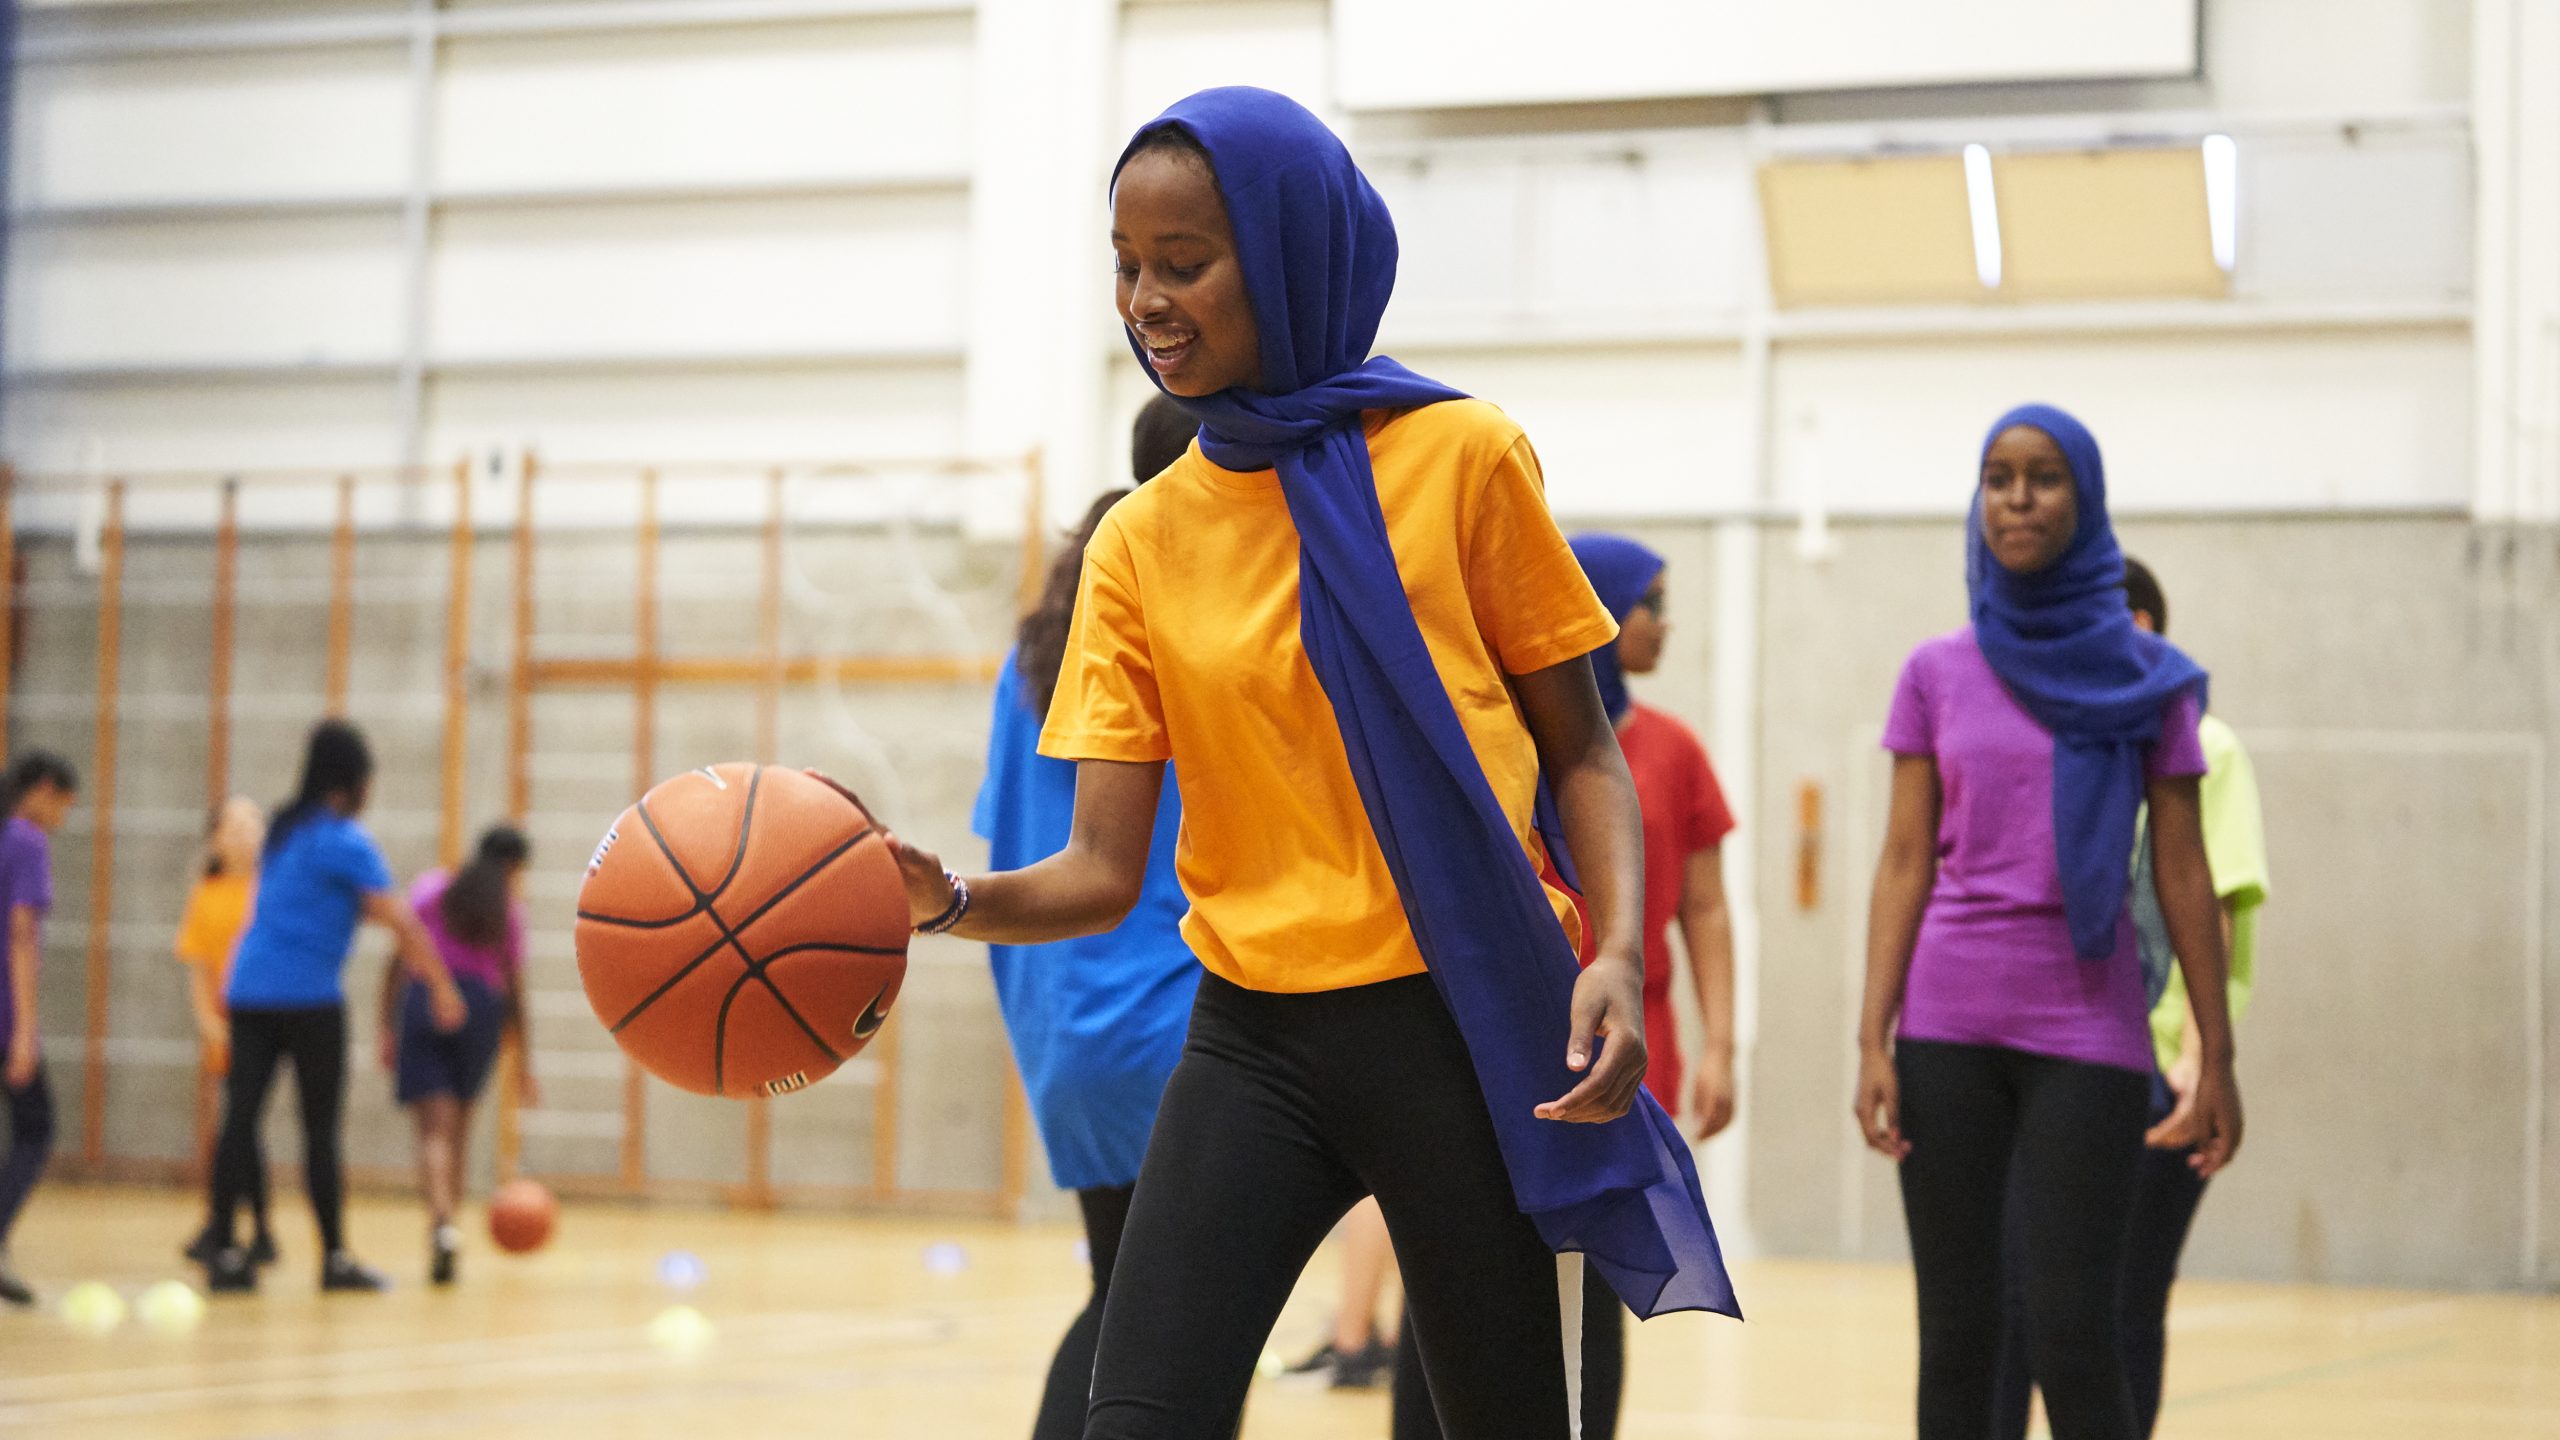 Muslim teenager playing basketball